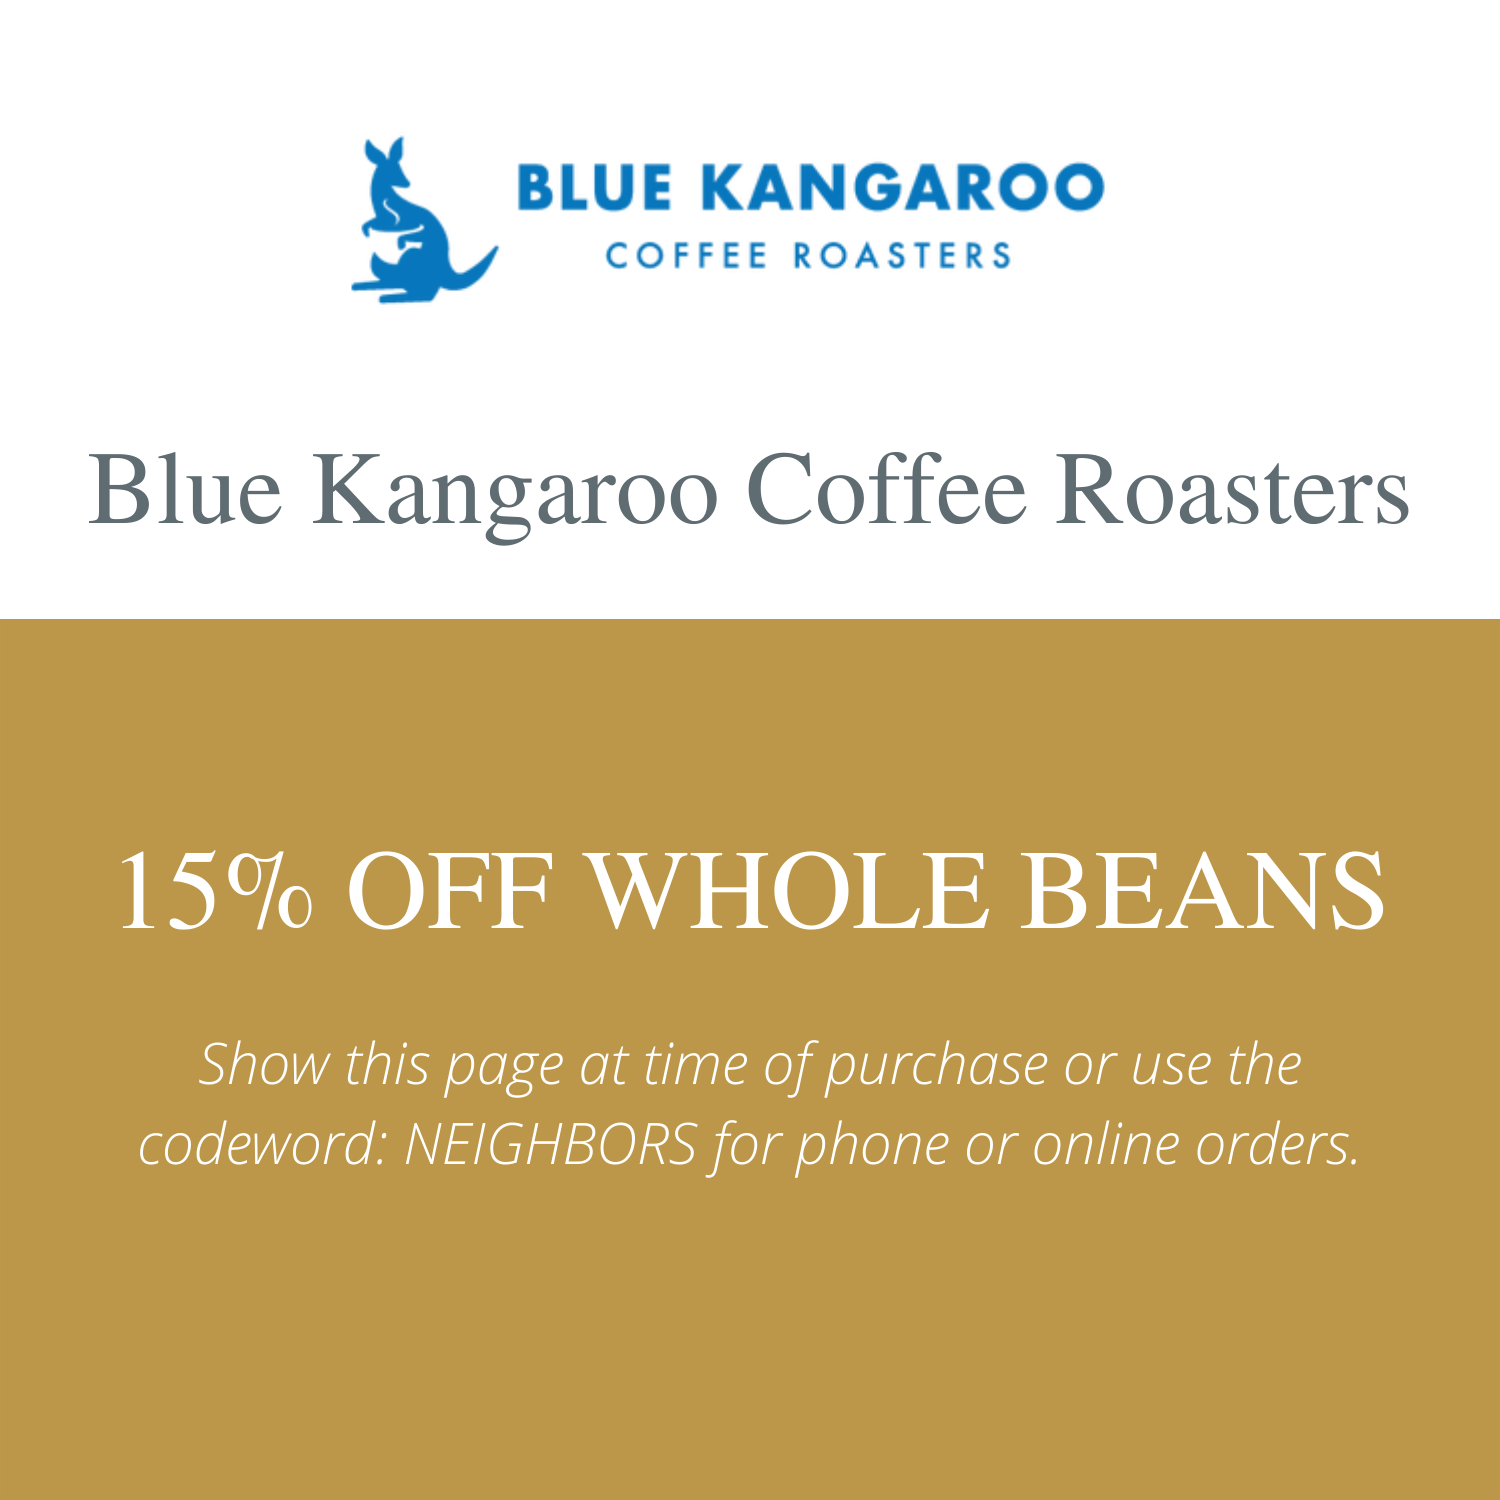 Blue Kangaroo Coffee Roasters Flyer